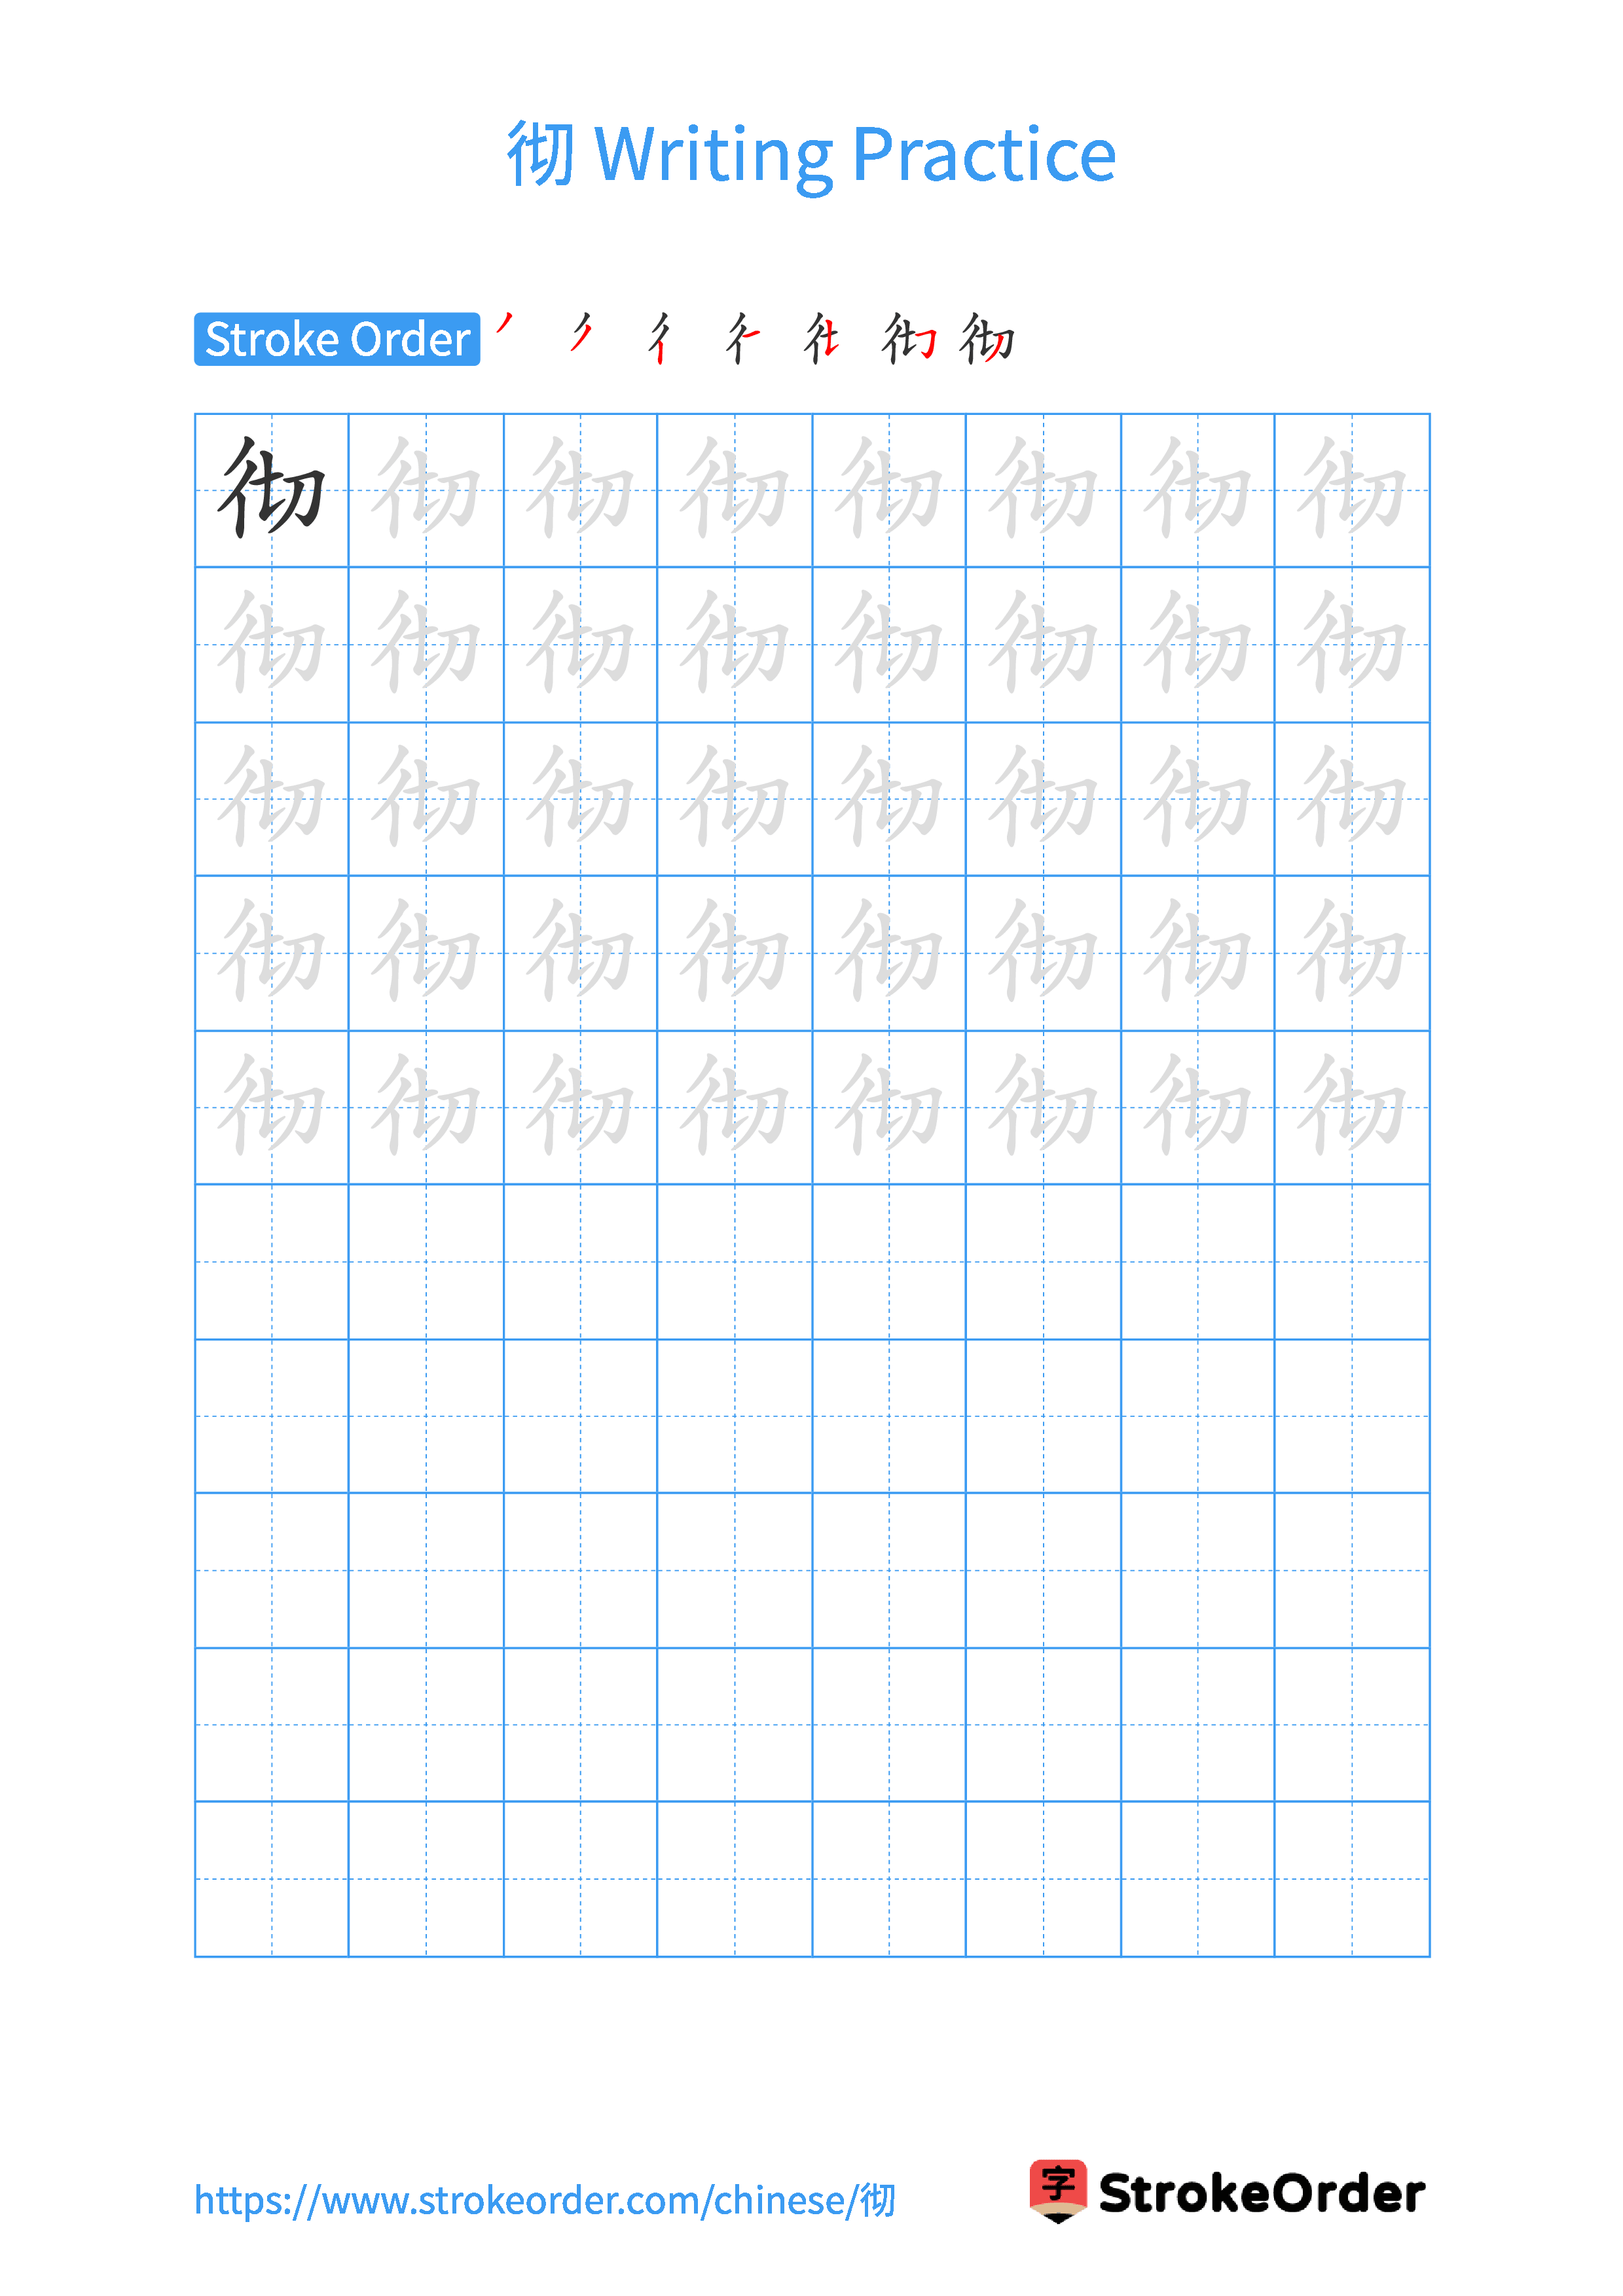 Printable Handwriting Practice Worksheet of the Chinese character 彻 in Portrait Orientation (Tian Zi Ge)